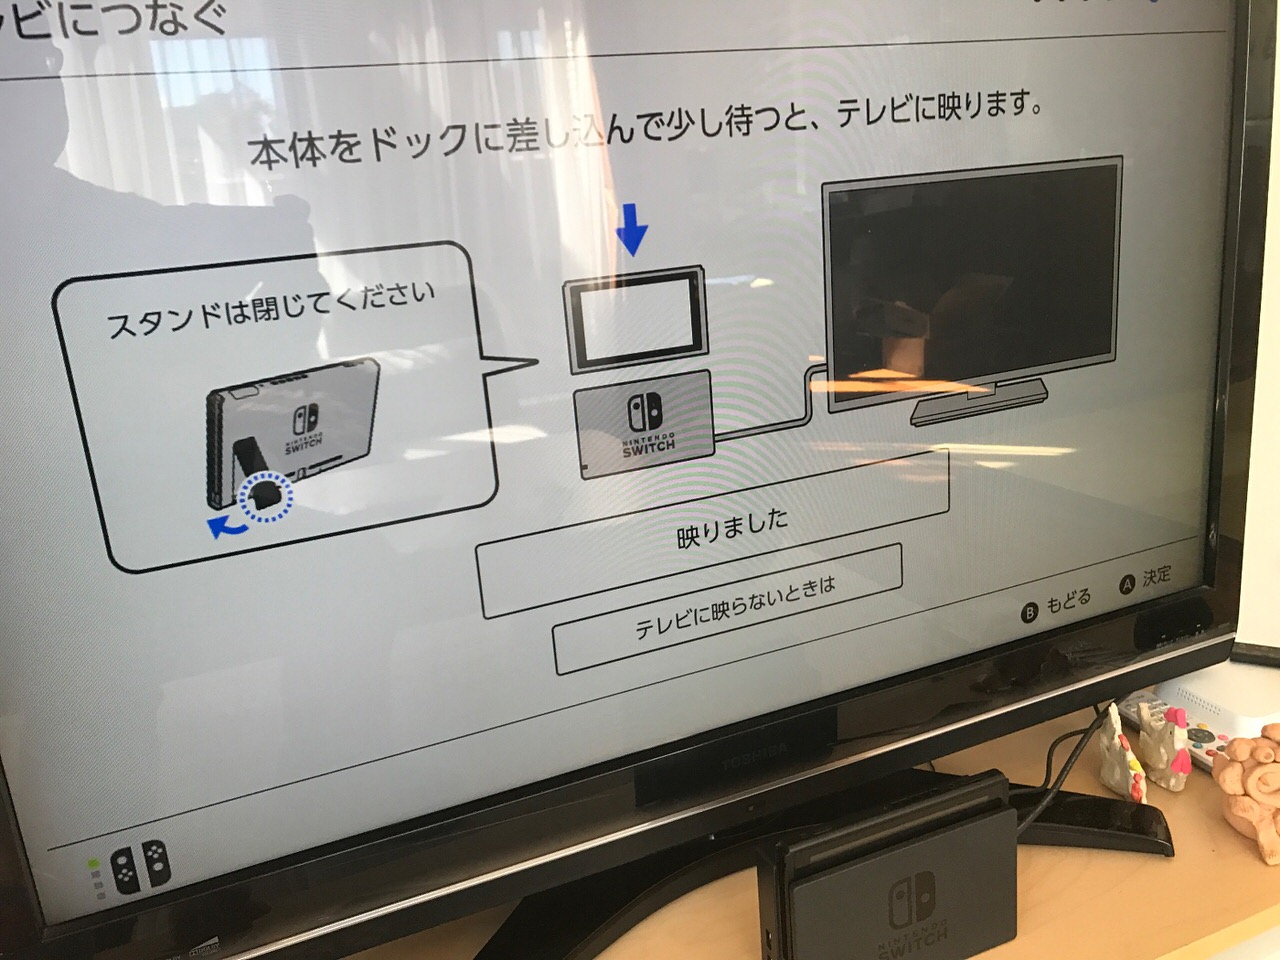 Nintendo switch setup 6775